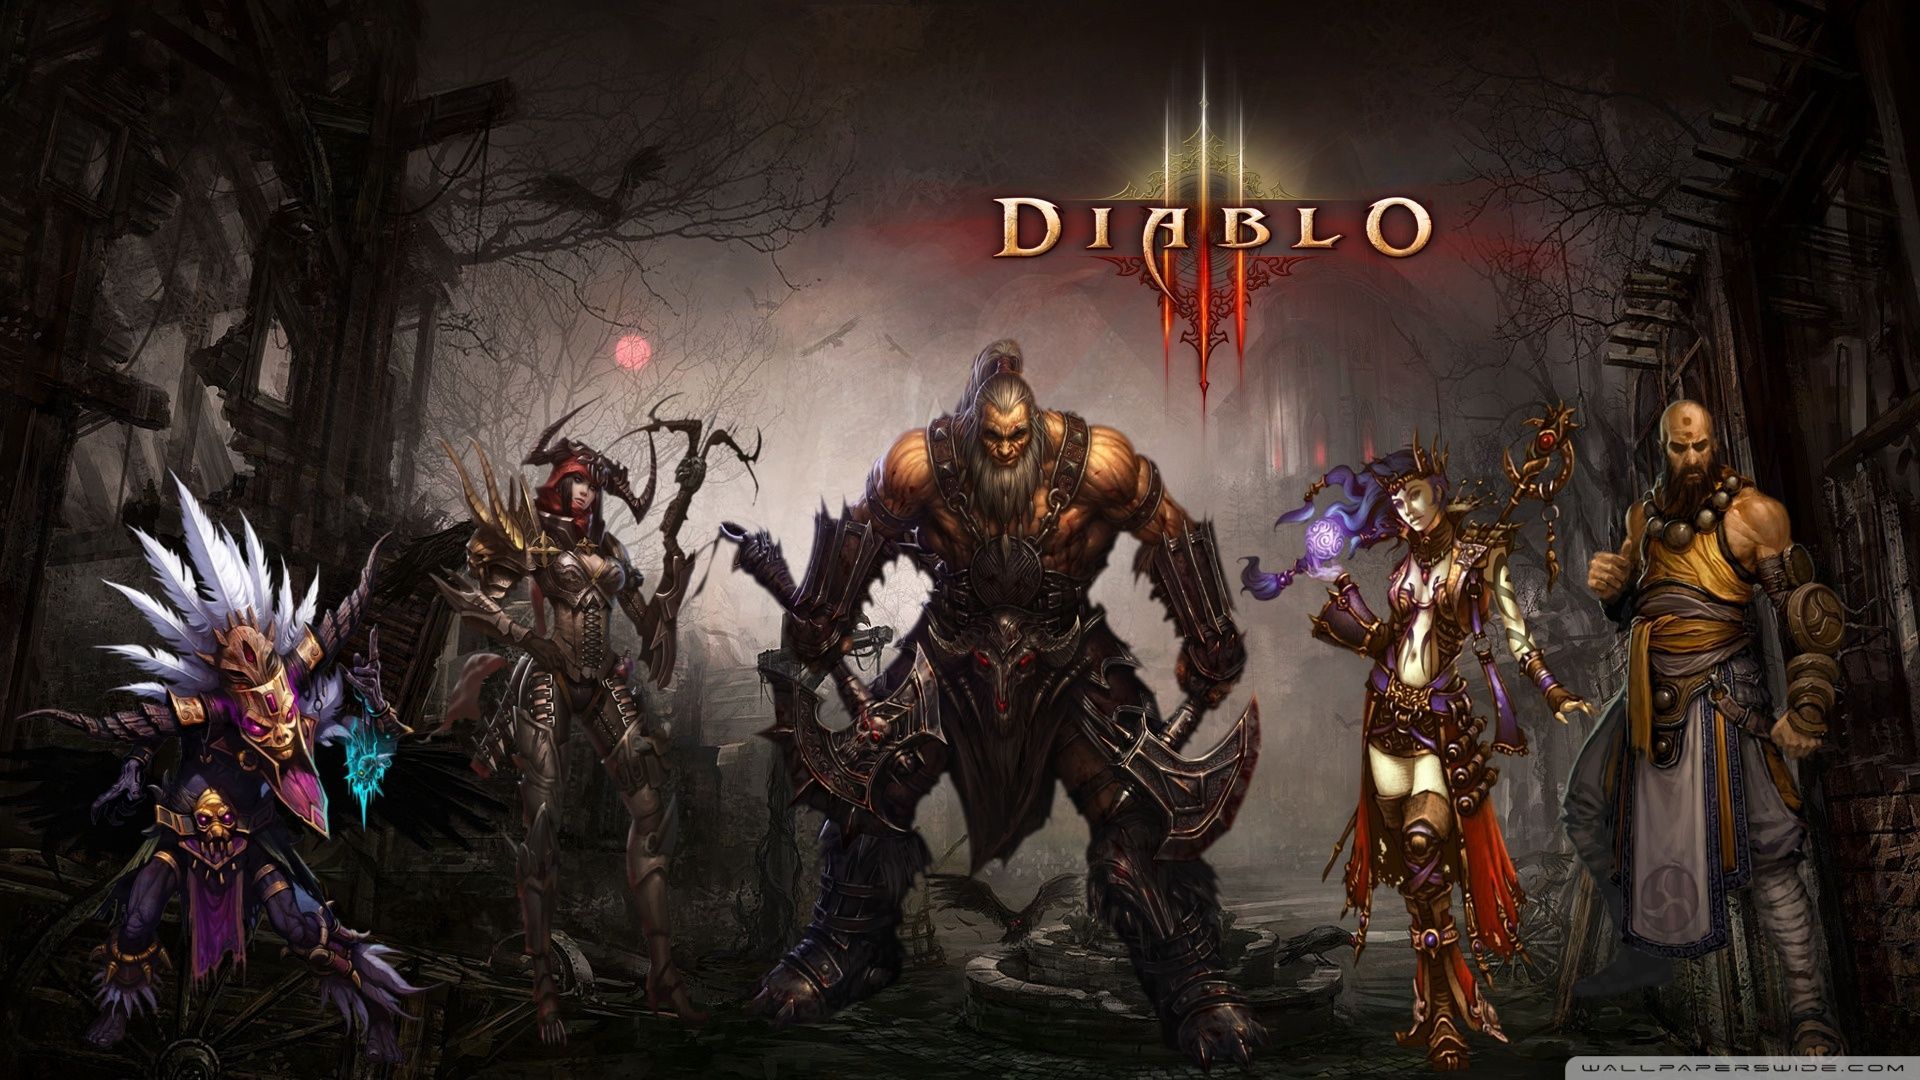  Diablo 3 1920x1080 Hintergrundbild 1920x1080. Diablo Artwork. Roleplaying game, Twitter background, Diablo 3